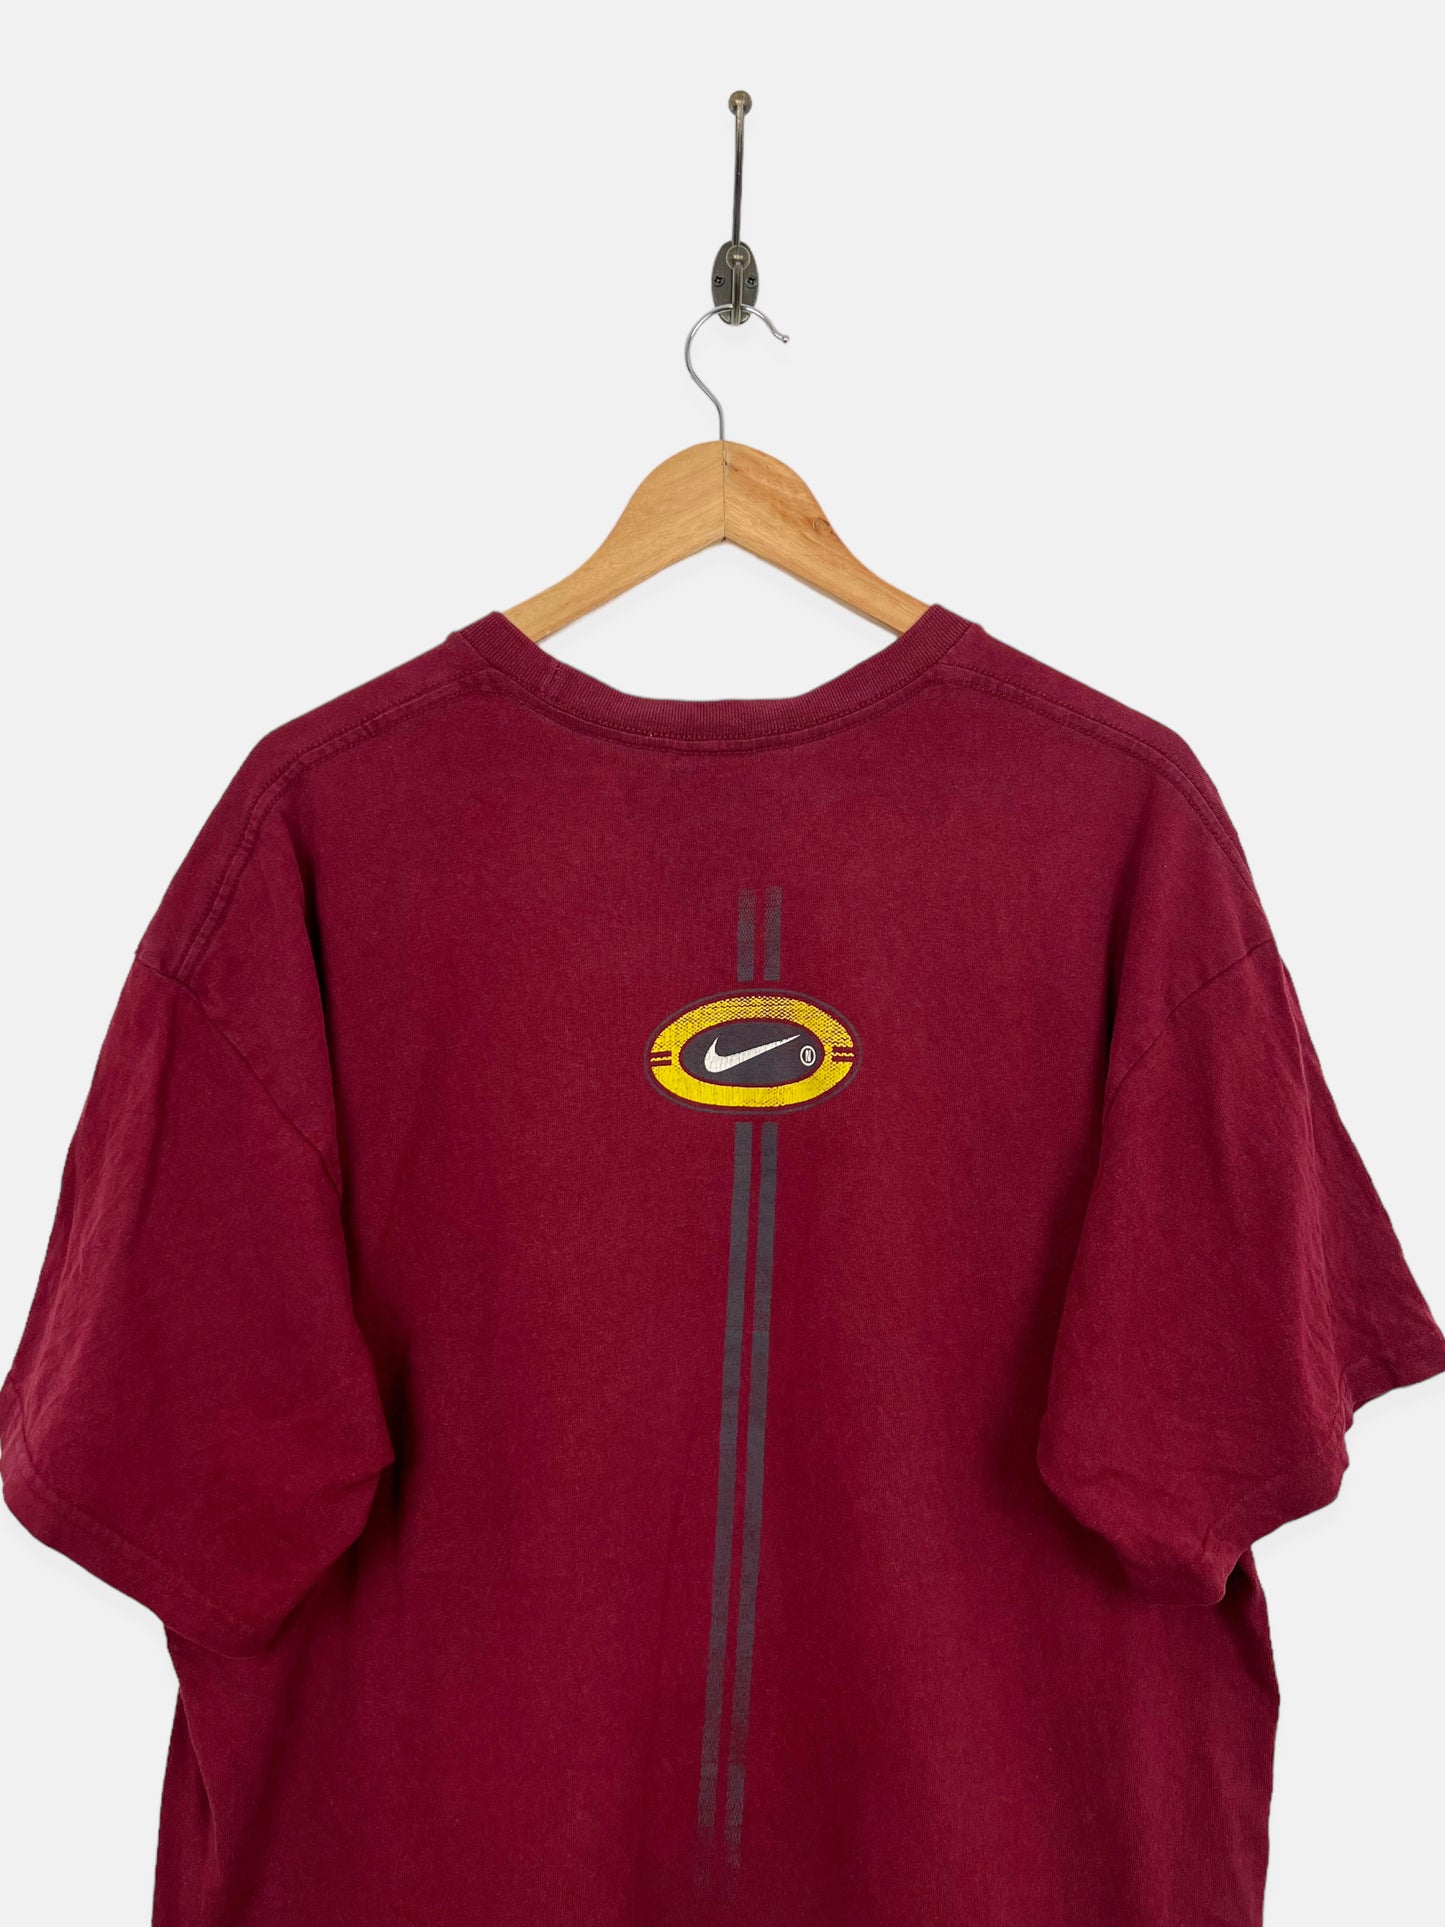 90's Nike USA Made Vintage T-Shirt Size 2XL